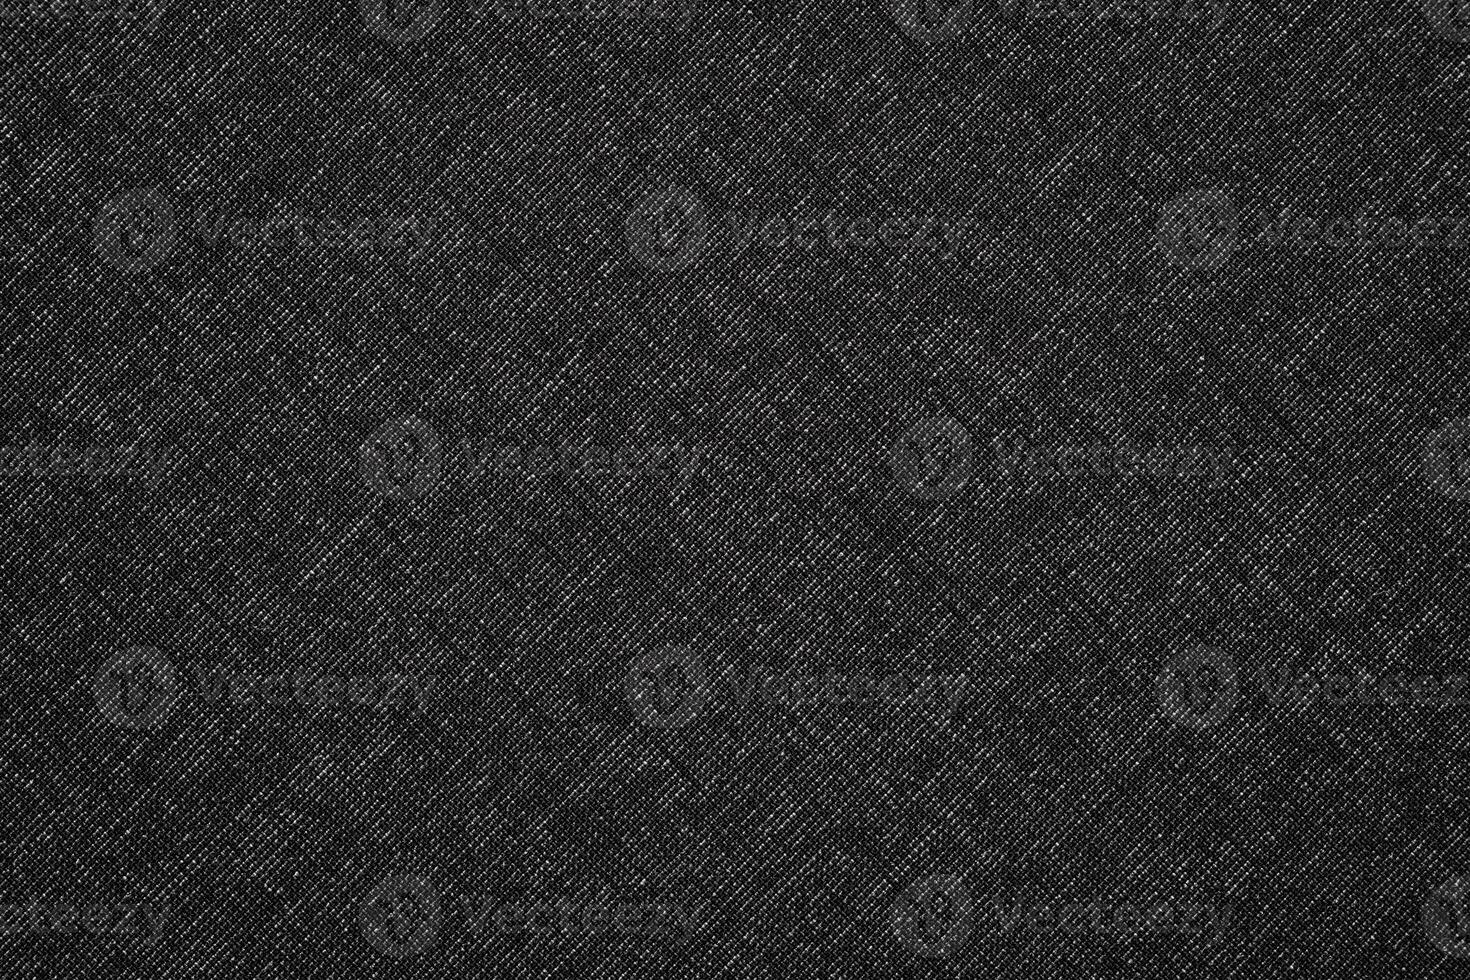 black fabric texture, natural linen textile as background photo